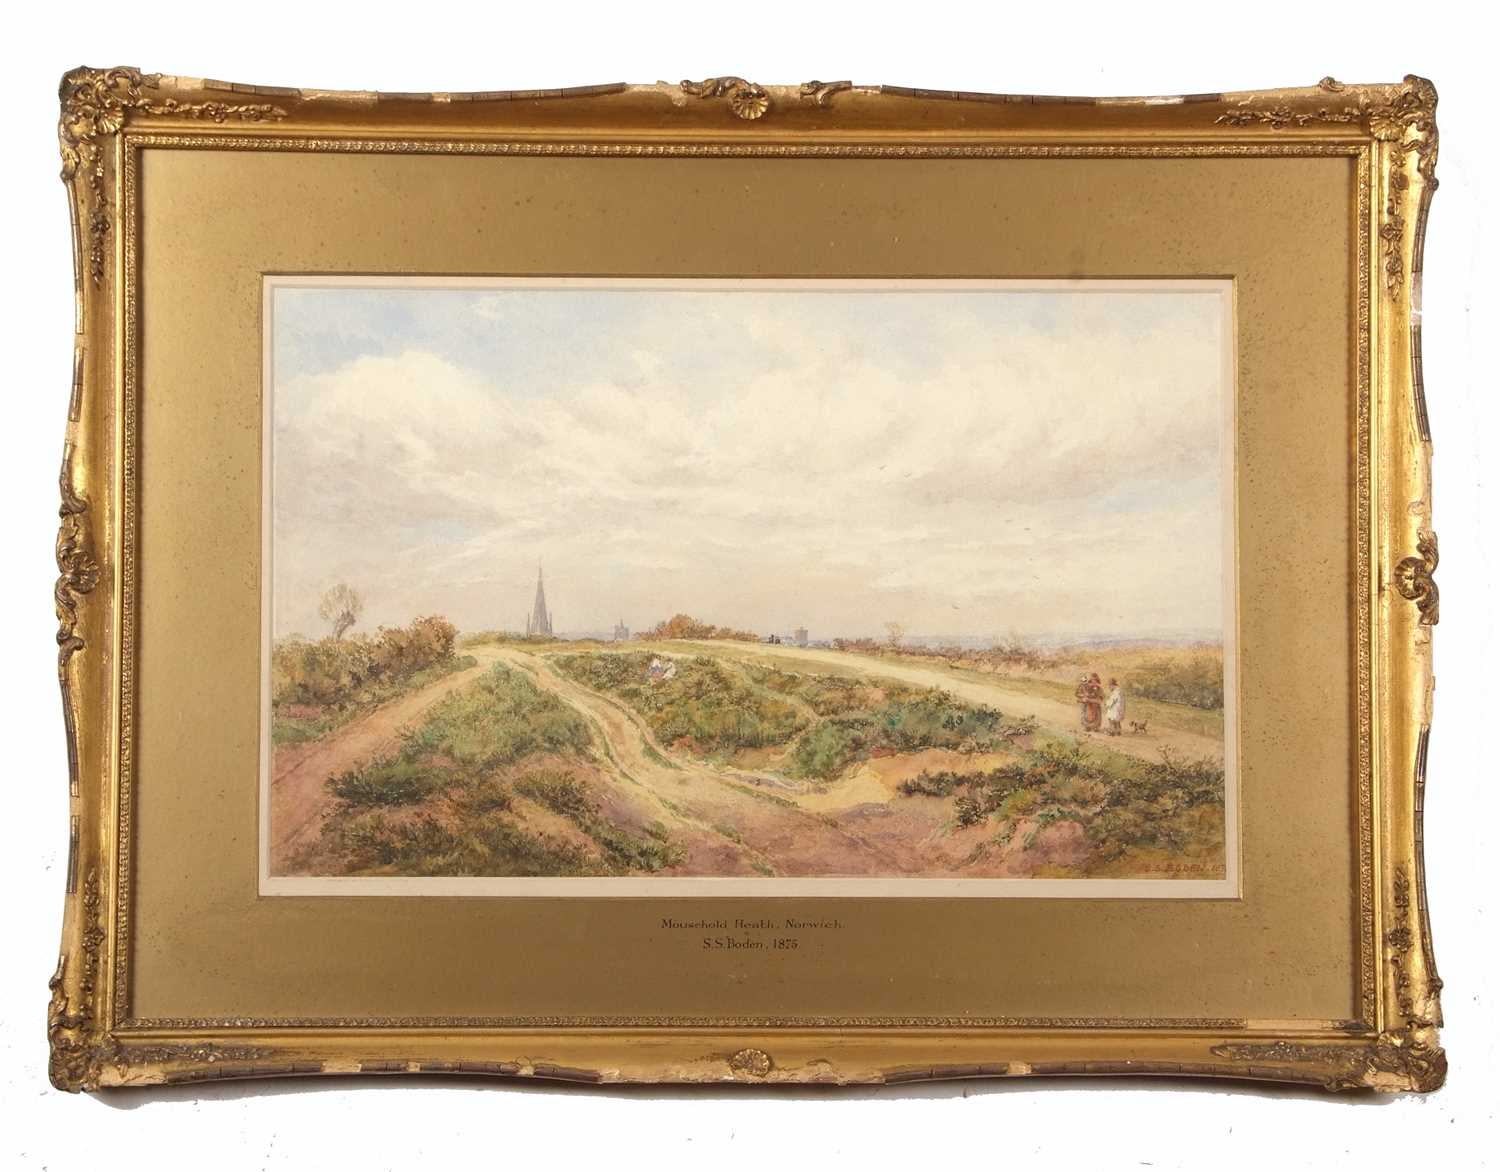 Samuel Standige Boden (British, 1826-1896), 'Mousehold Heath, Norwich', watercolour, 11.5x8.5ins,